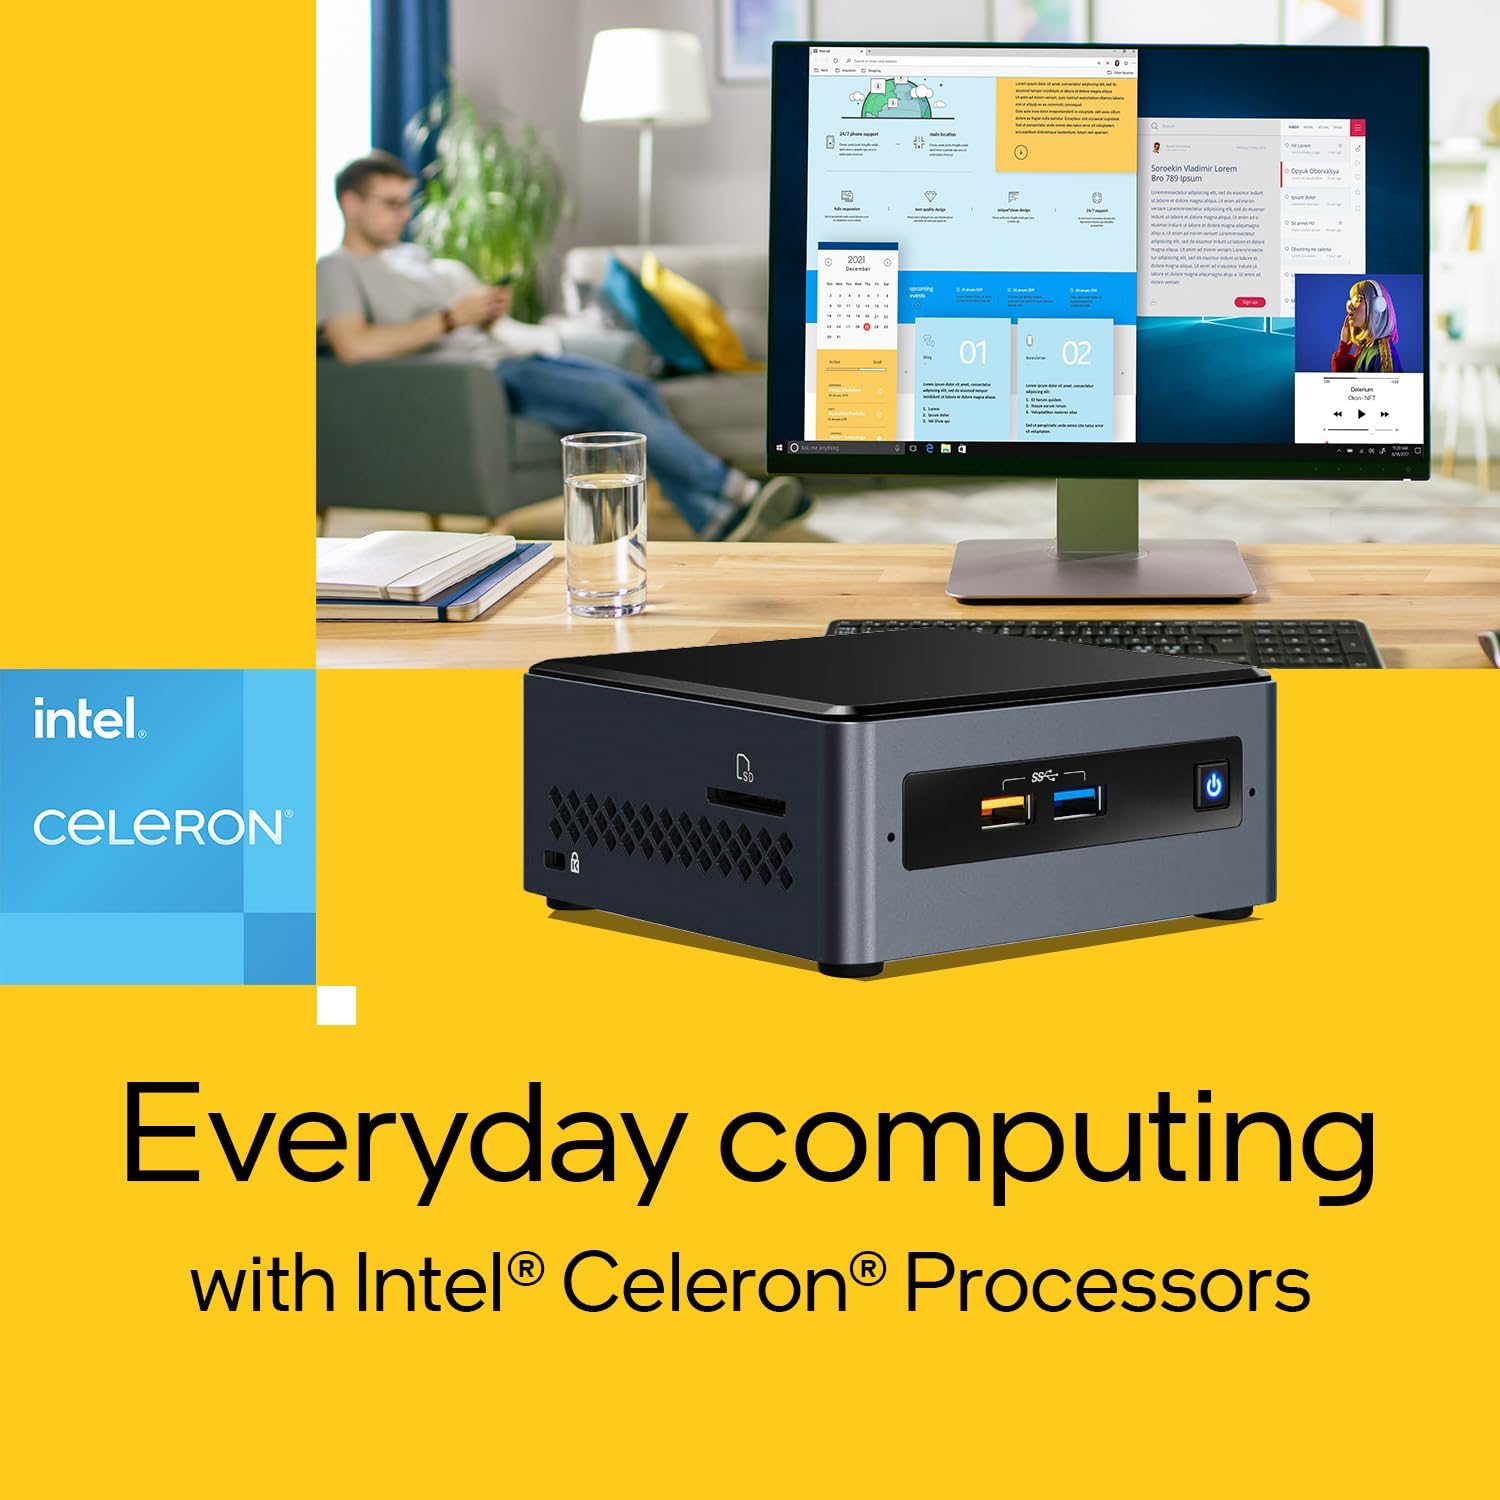 Intel NUC7CJYHN Mini PC Kit June Canyon，Celeron J4025 Dual Core Processor， Dual HDMI 4k Support，Barebone System without Power Cord